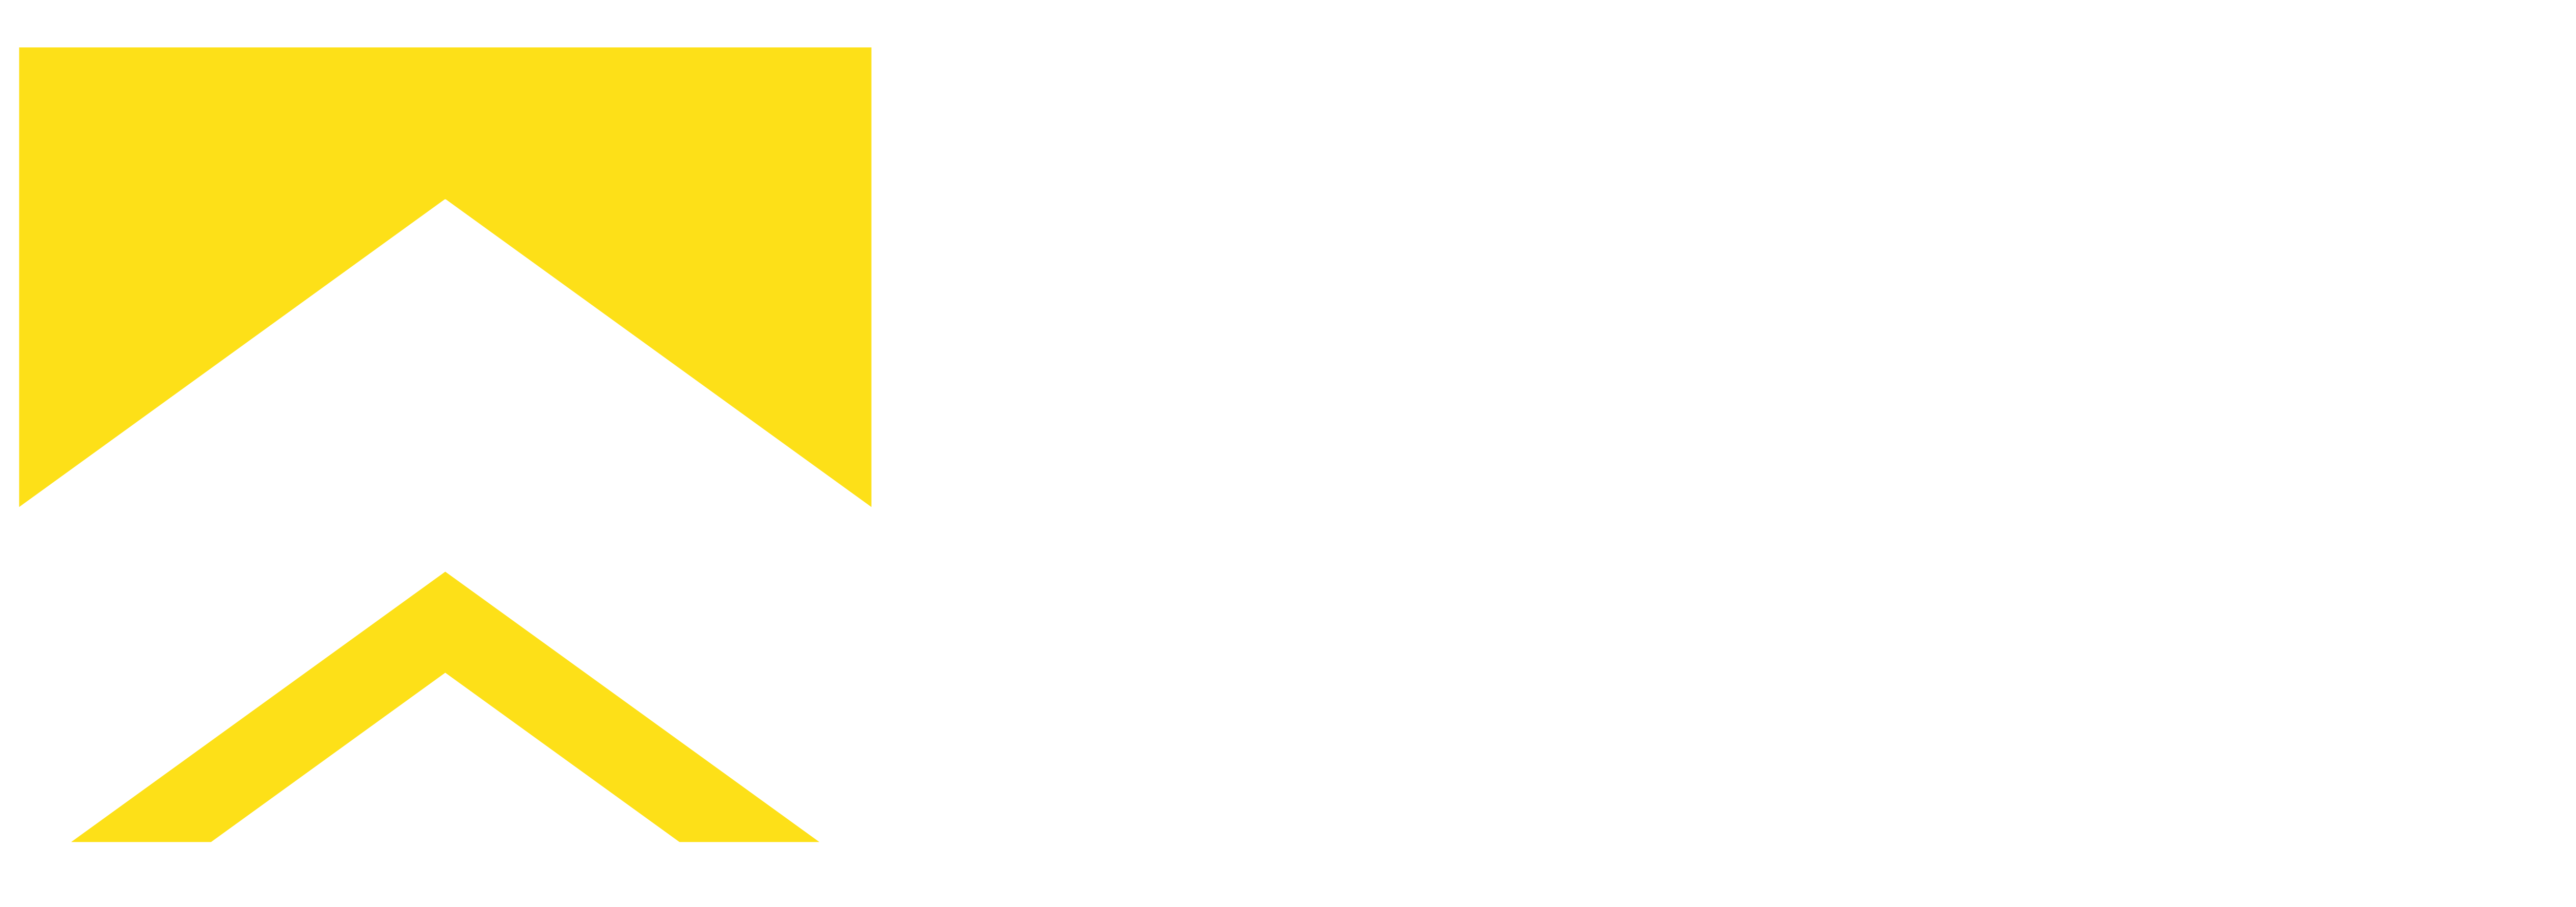 Zach Buys Houses